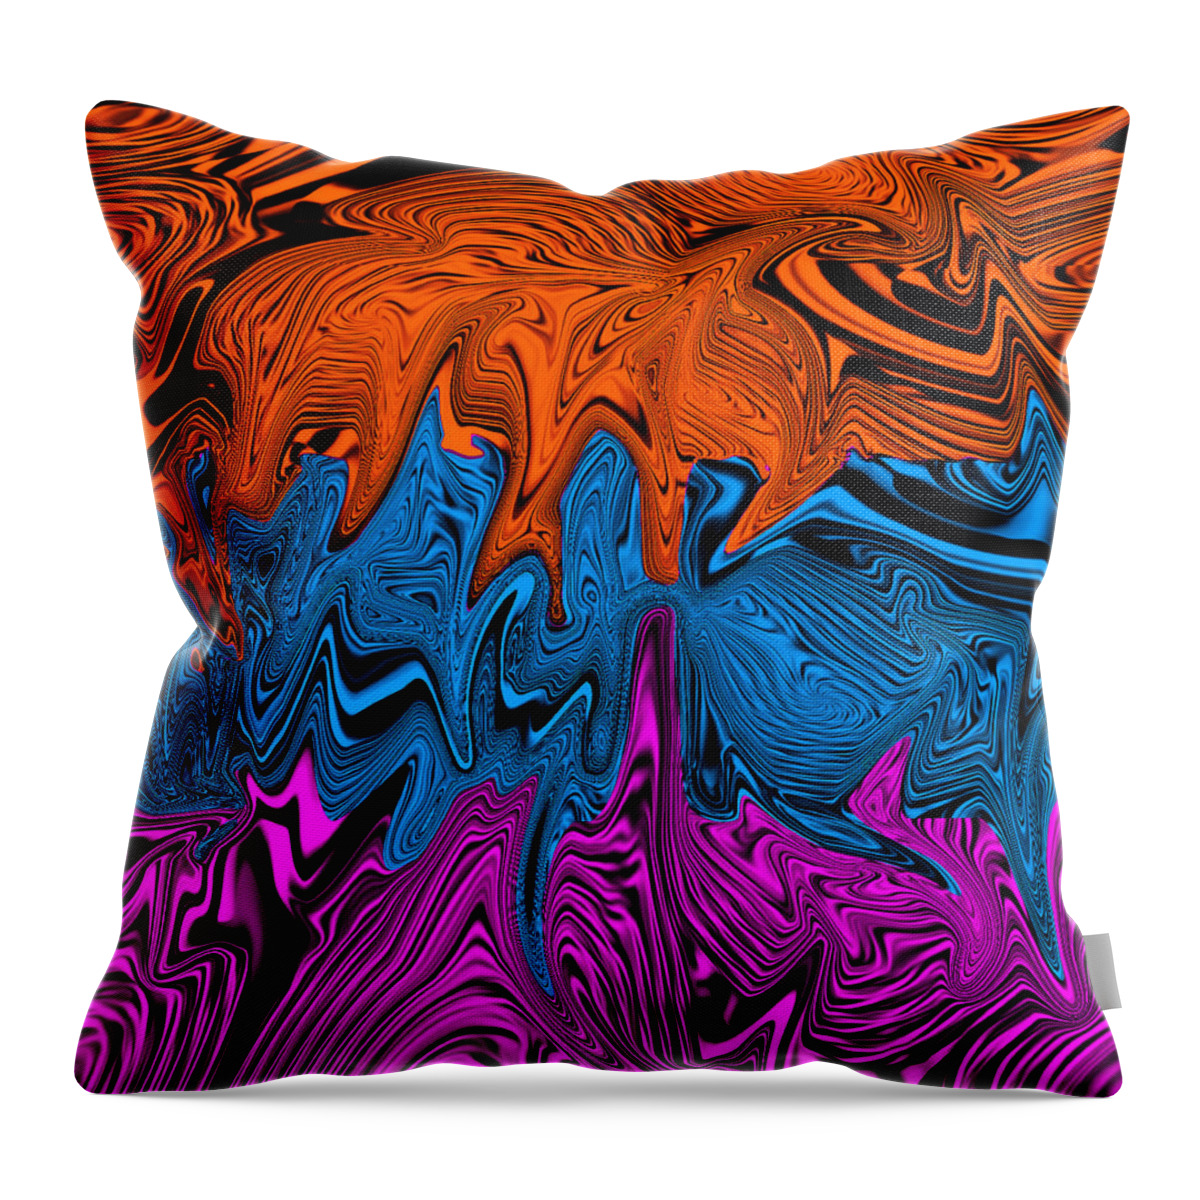 Abstract Art Throw Pillow featuring the digital art Liquid Flows by Ronald Mills